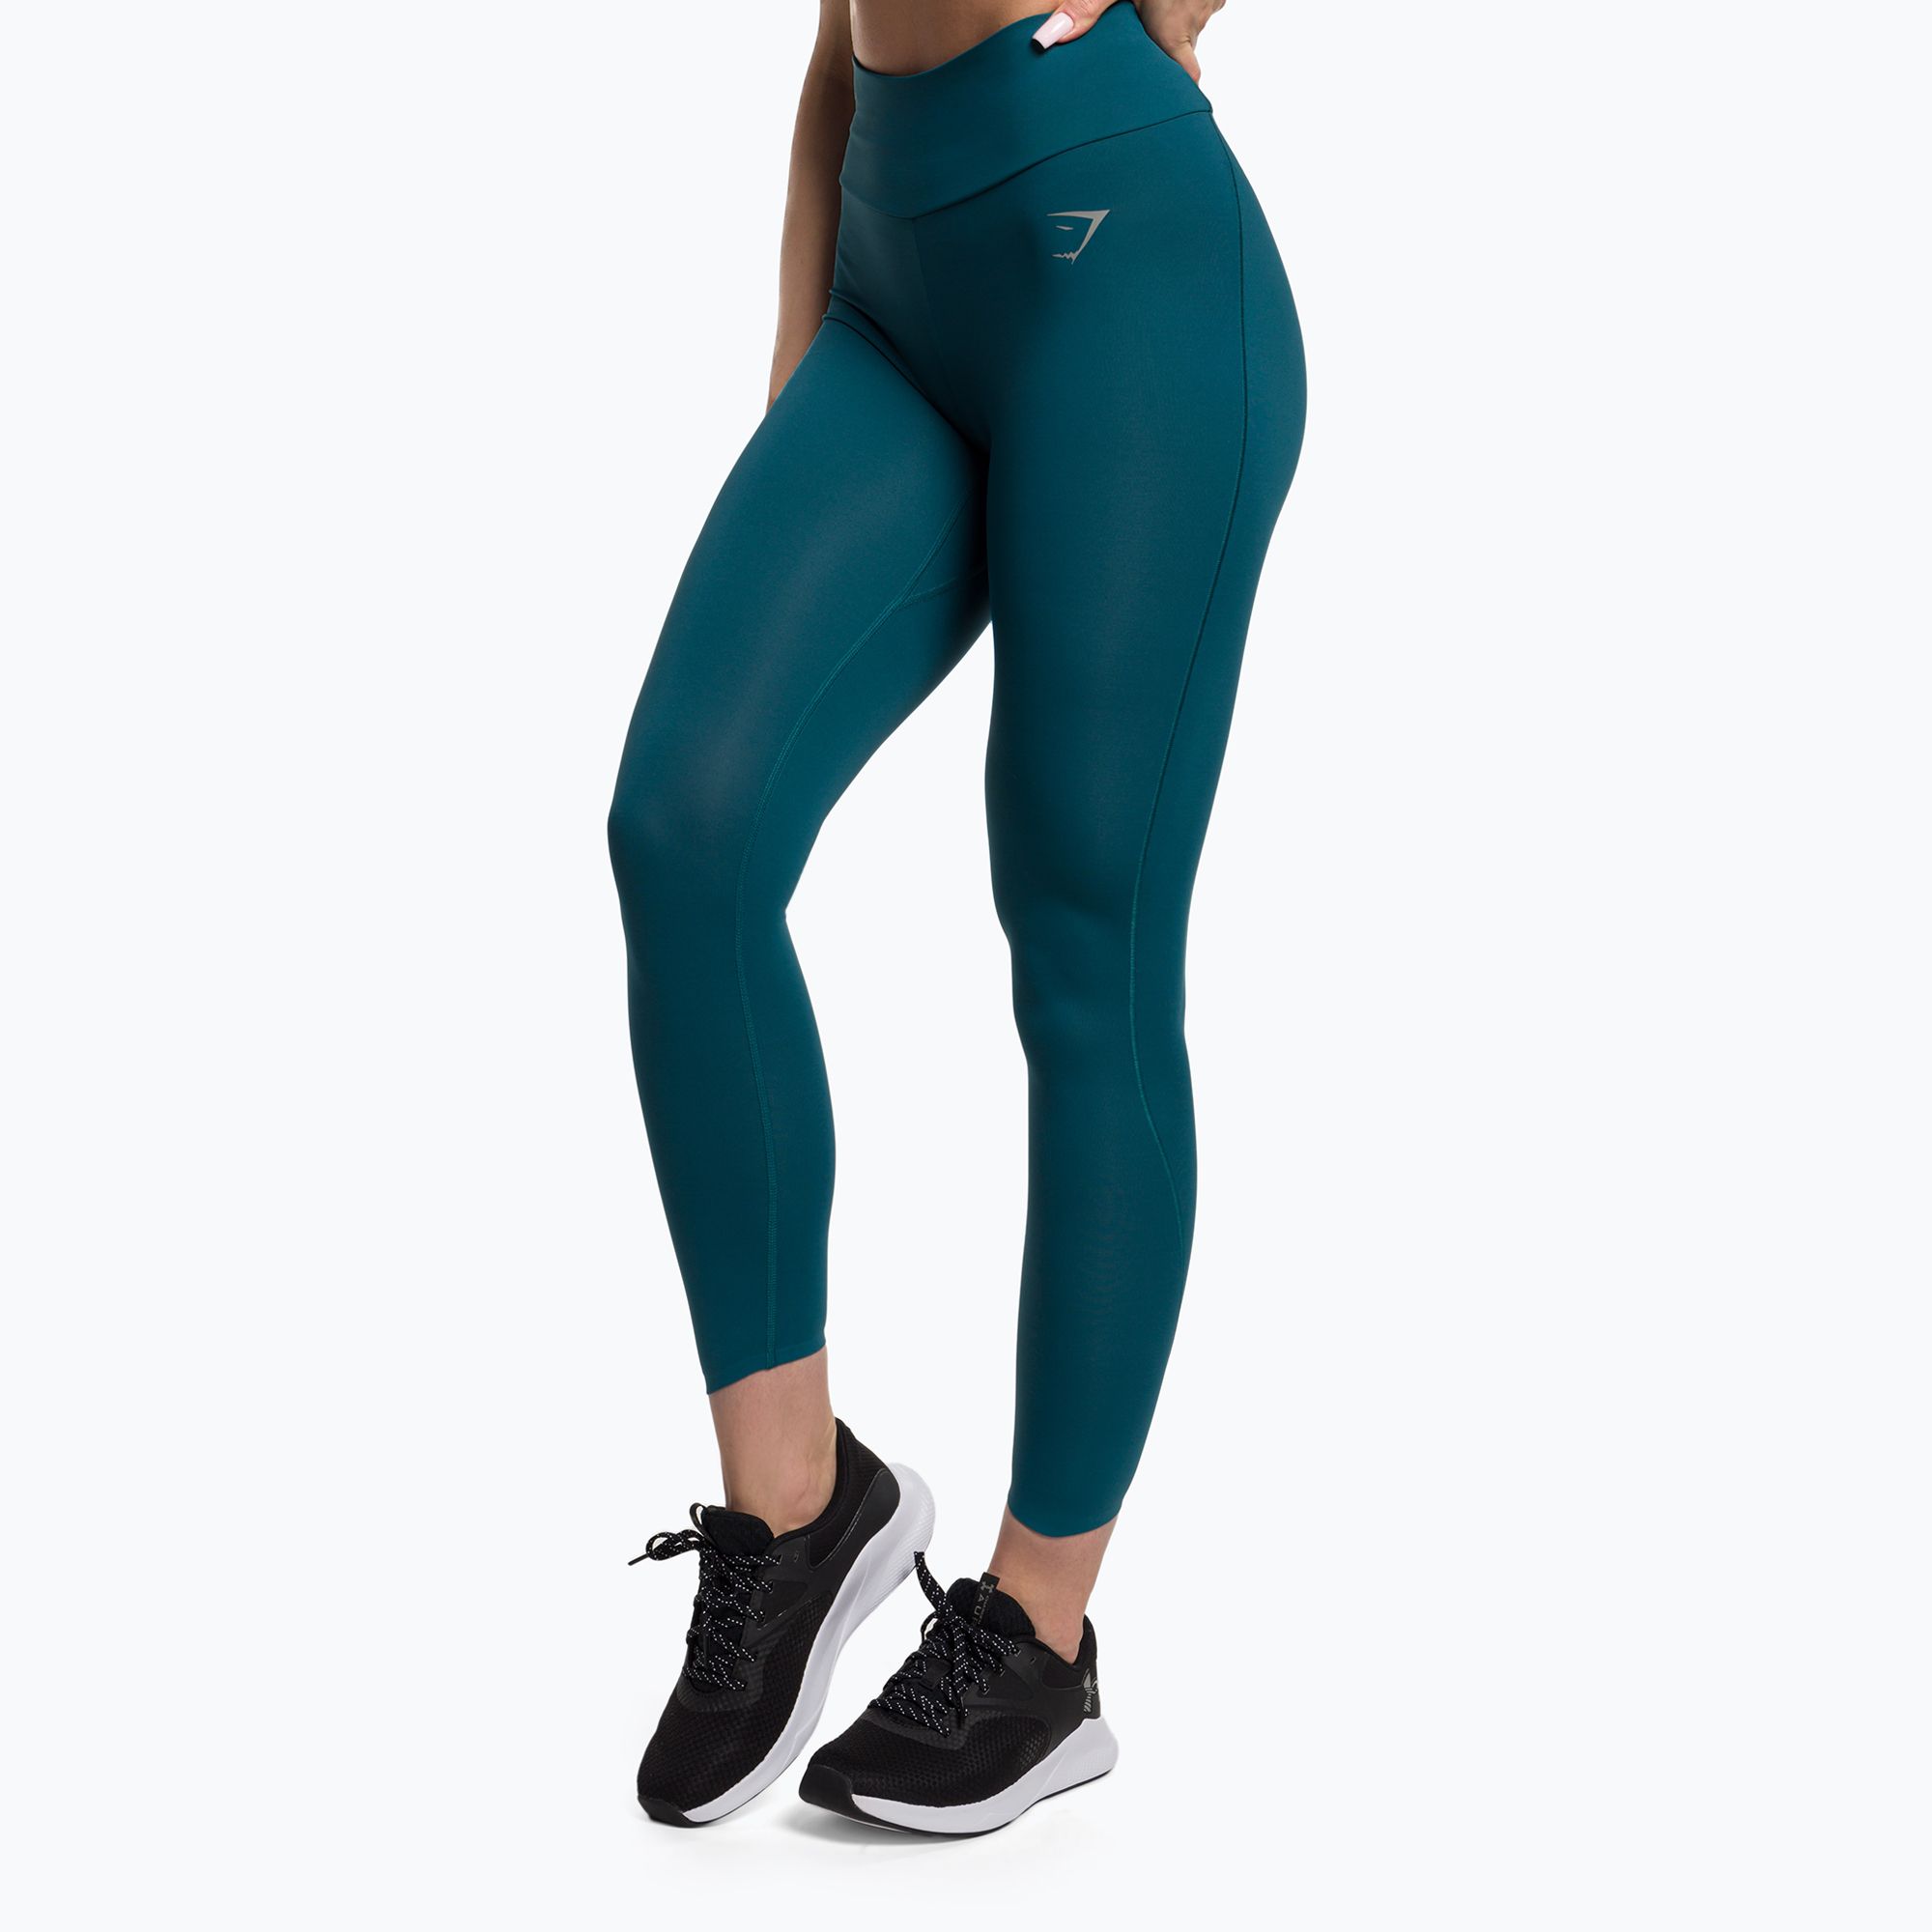 https://sportano.com/img/986c30c27a3d26a3ee16c136f92f4ff5/5/0/5057913522971_1-jpg/women-s-training-leggings-gymshark-speed-niagara-teal-0.jpg